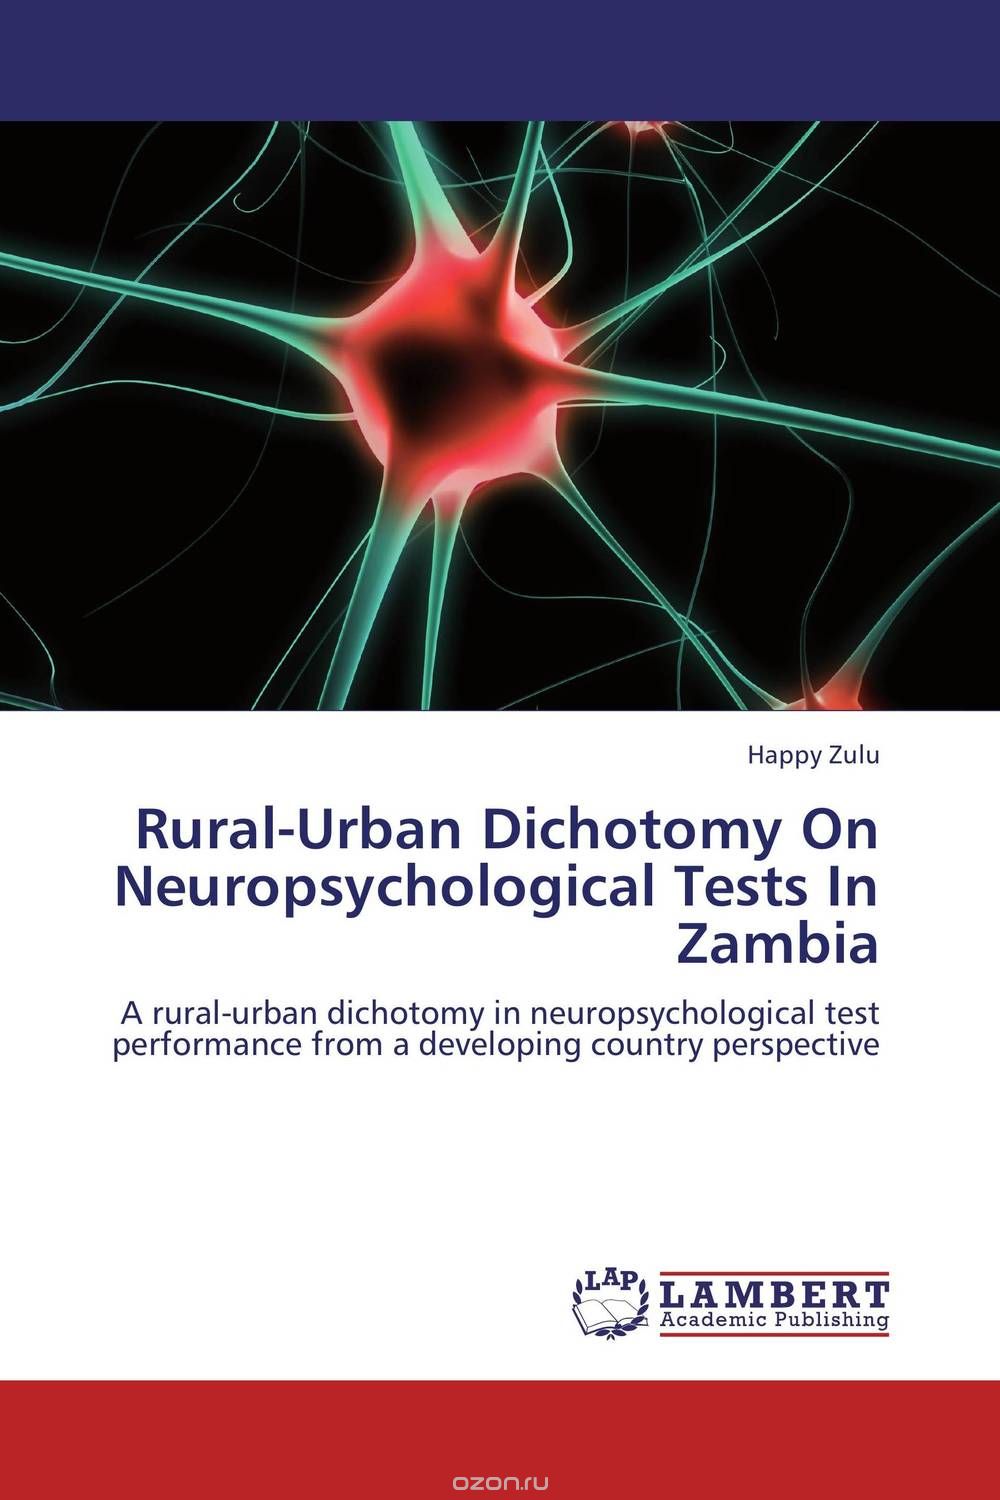 Скачать книгу "Rural-Urban Dichotomy On Neuropsychological Tests In Zambia"